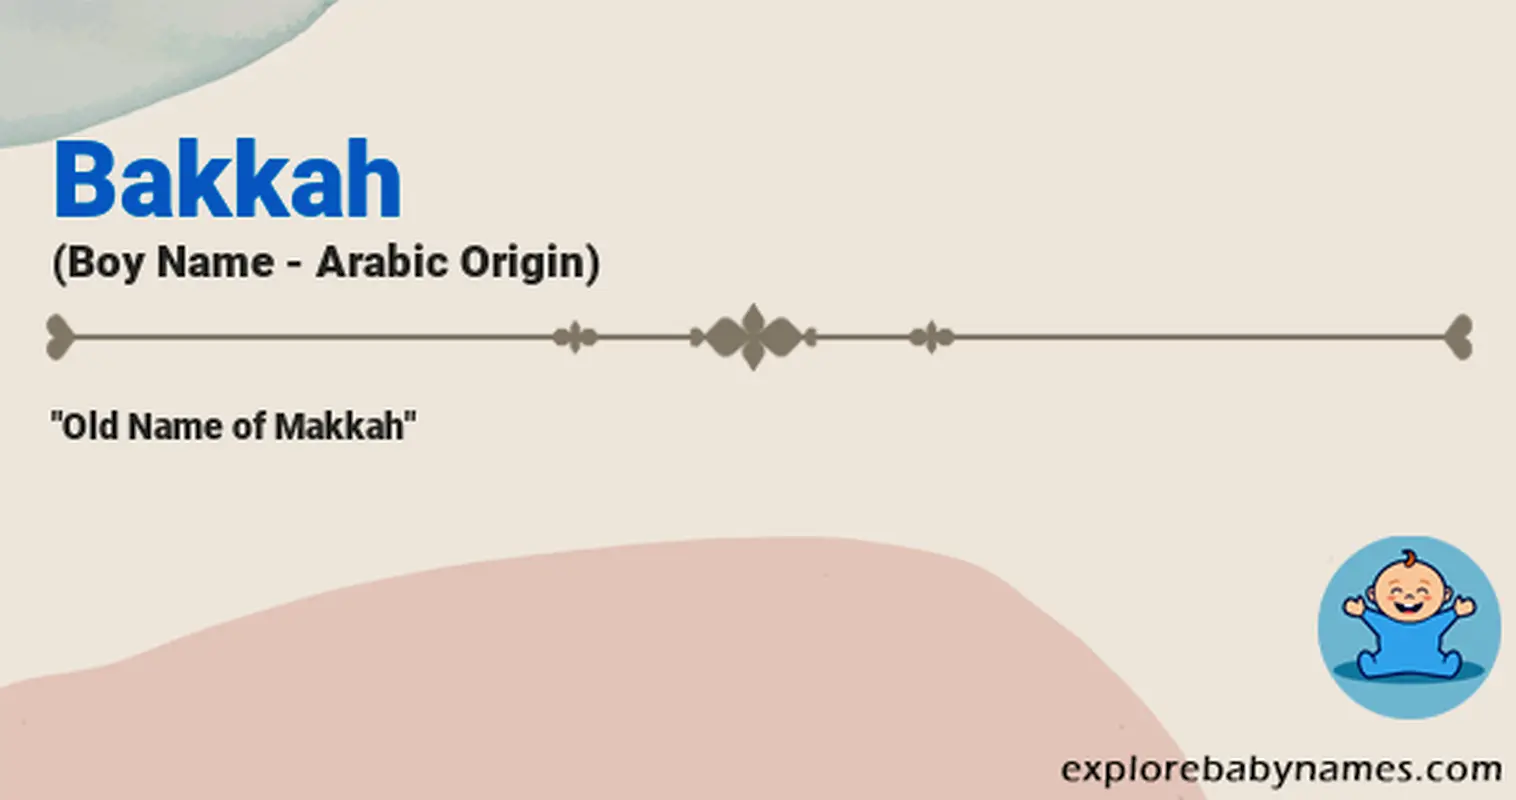 Meaning of Bakkah